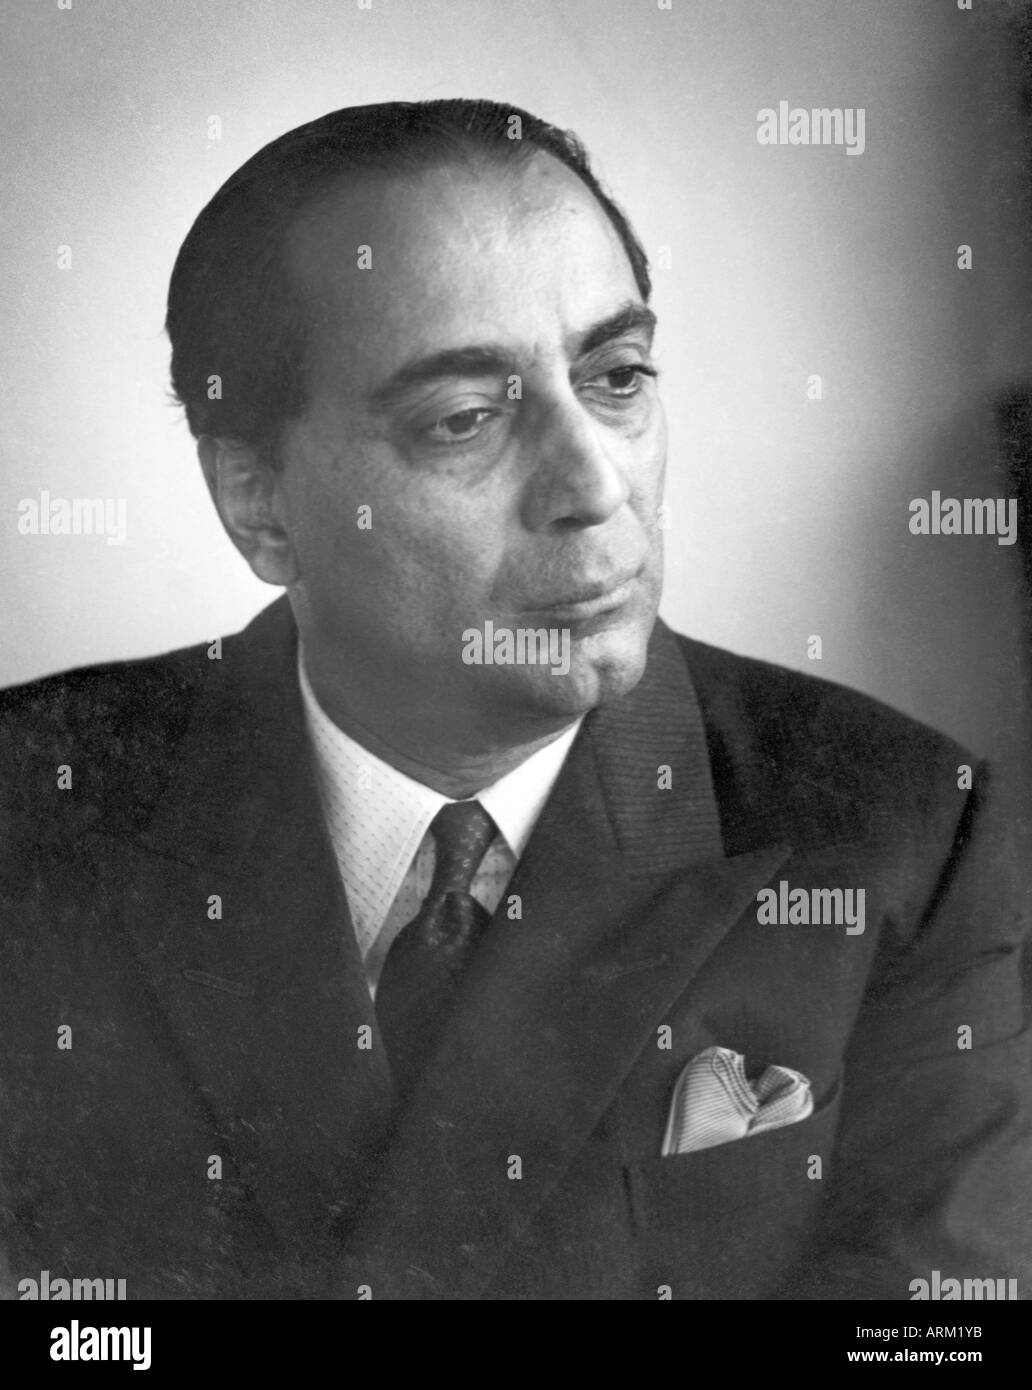 Dr. Homi Jehangir Bhabha indischer Nuklearphysiker, Direktor, Professor für Physik am TIFRA - Tata Institute of Fundamental Research, Indien, 1909-1966 Stockfoto